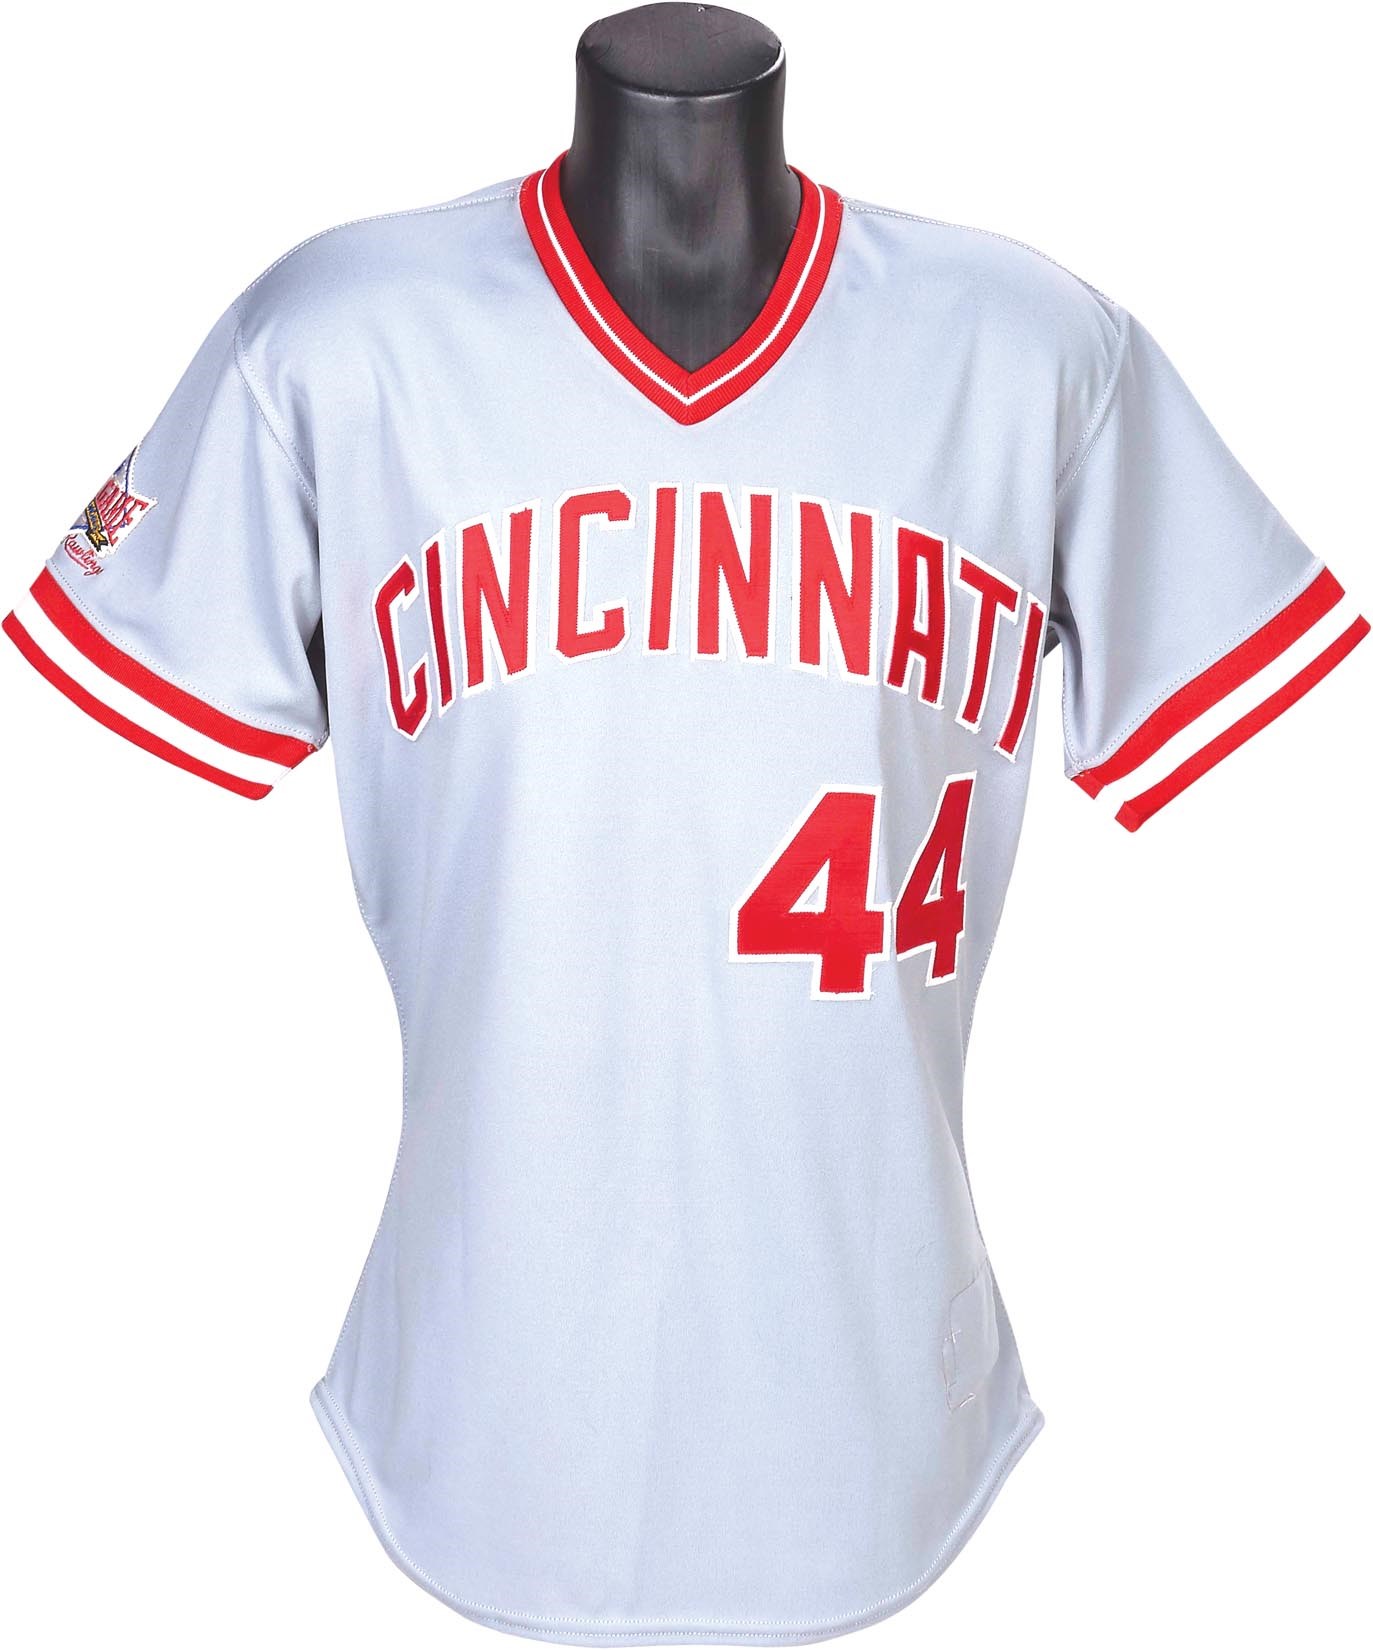 Bernie Stowe Cincinnati Reds Collection - 1989 Eric Davis Cincinnati Reds All-Star Game Worn Uniform